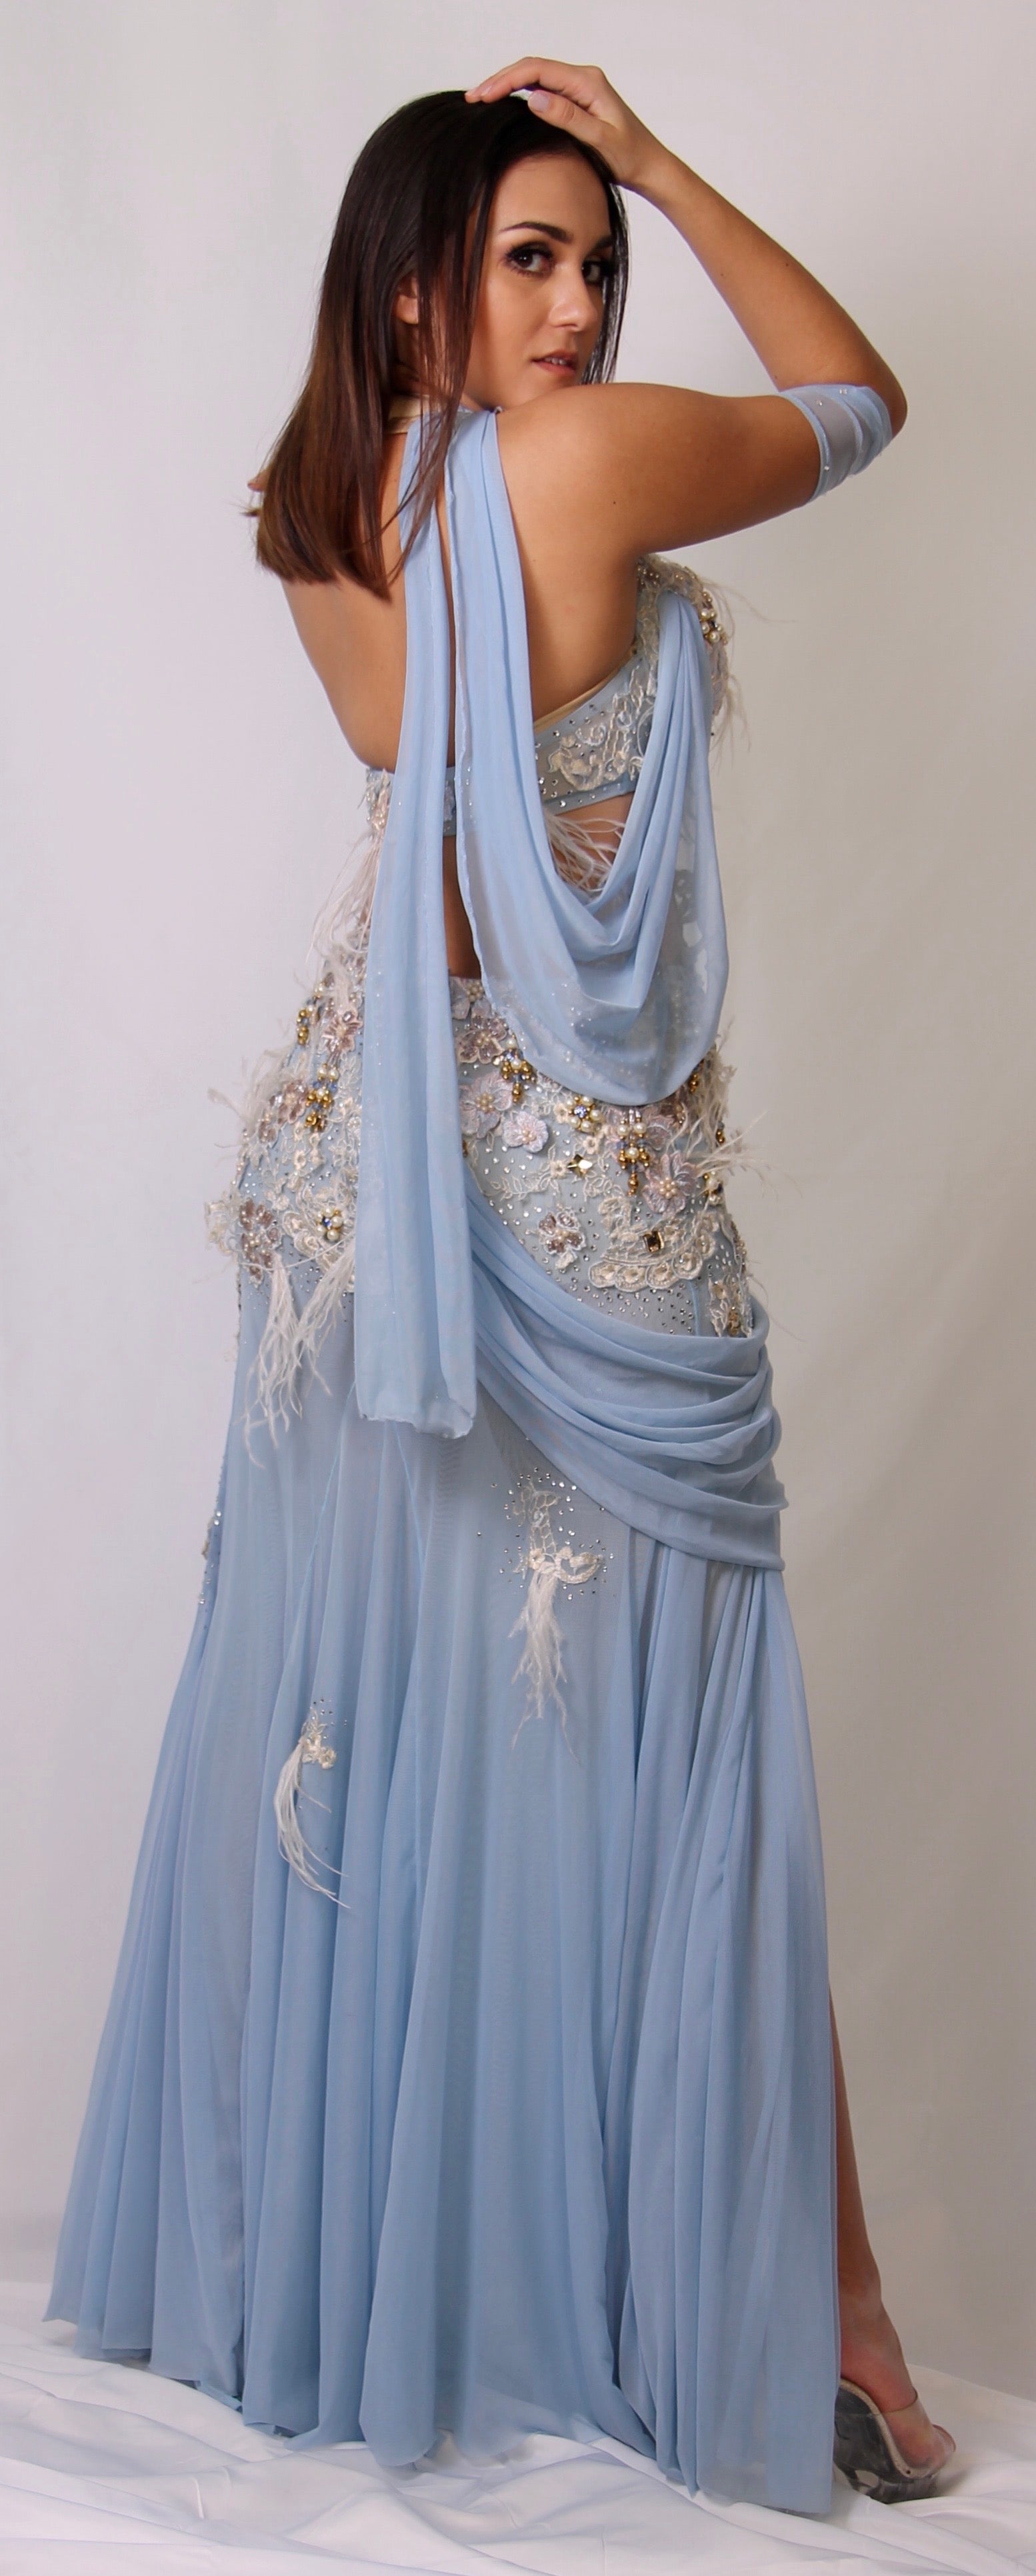 Eman Zaki Costume 25025